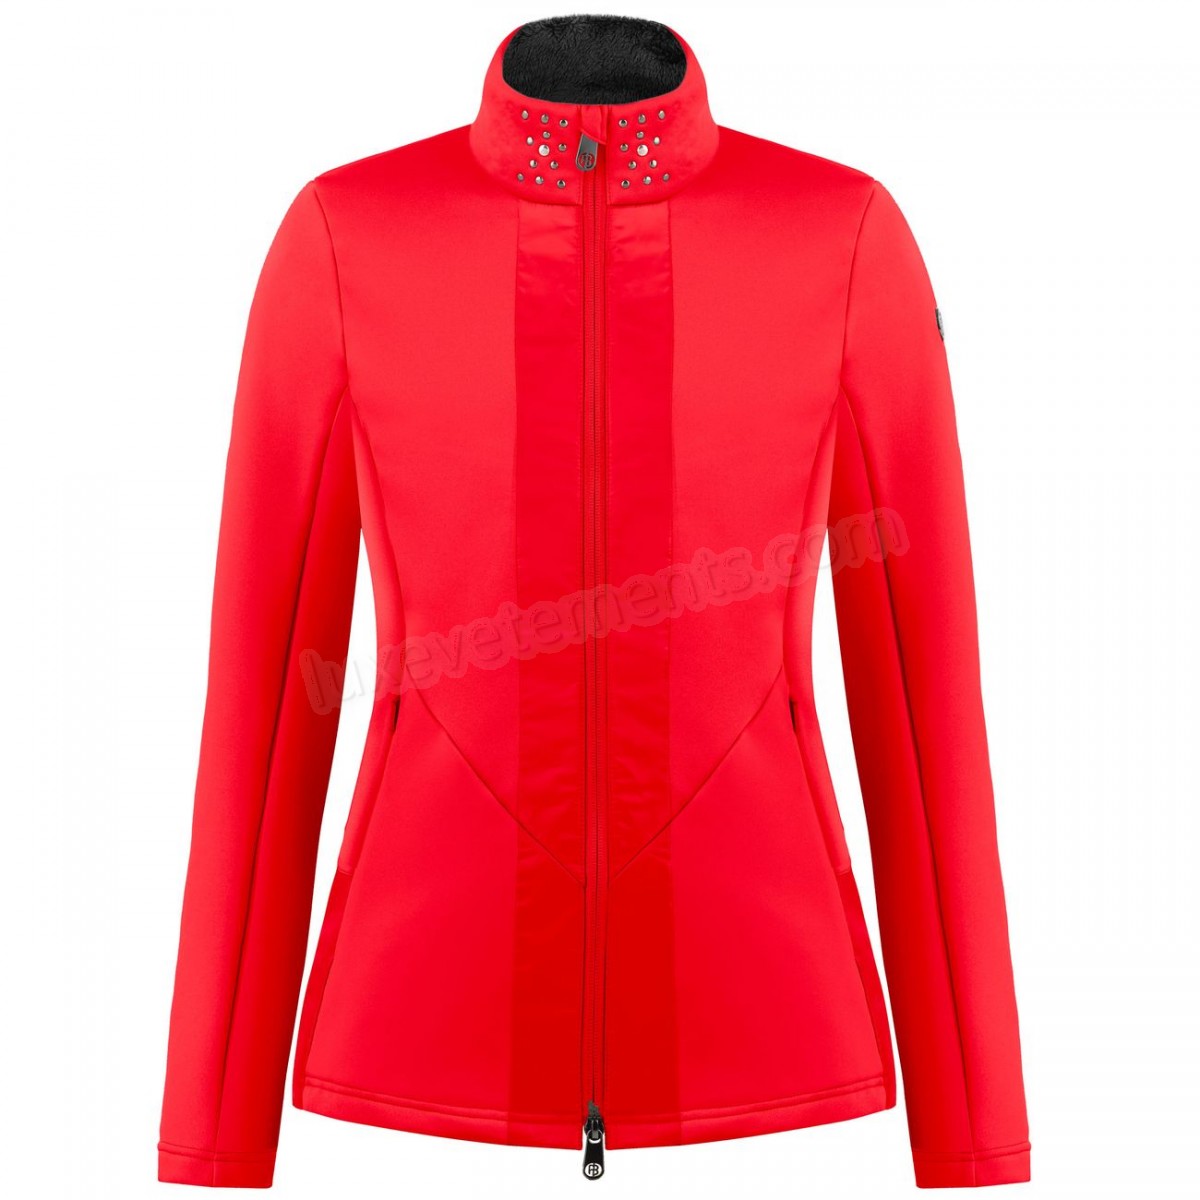 Poivre Blanc-Sports d'hiver femme POIVRE BLANC Veste En Polaire Poivre Blanc Hybrid Stretch Fleece Jacket 1702 Scarlet Red 5 Femme Vente en ligne - -1